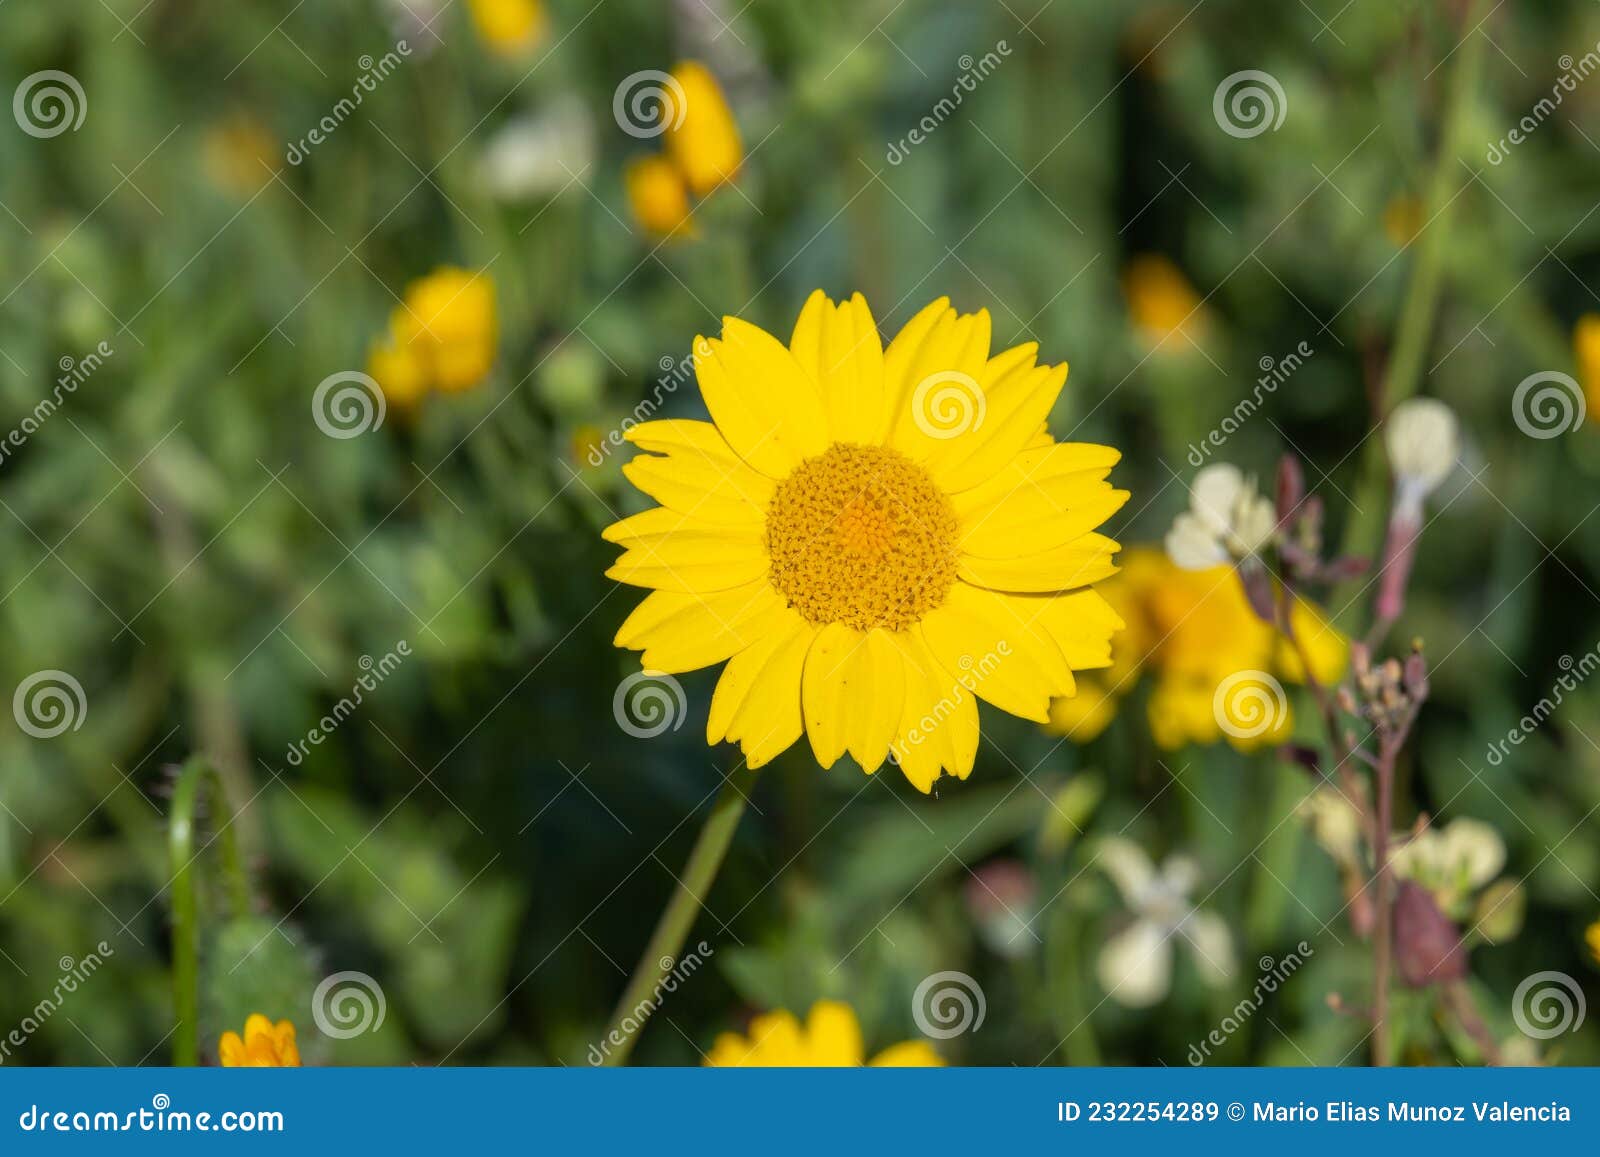 anthemis tinctoria (cota tinctoria or golden marguerite, yellow chamomile) flowers